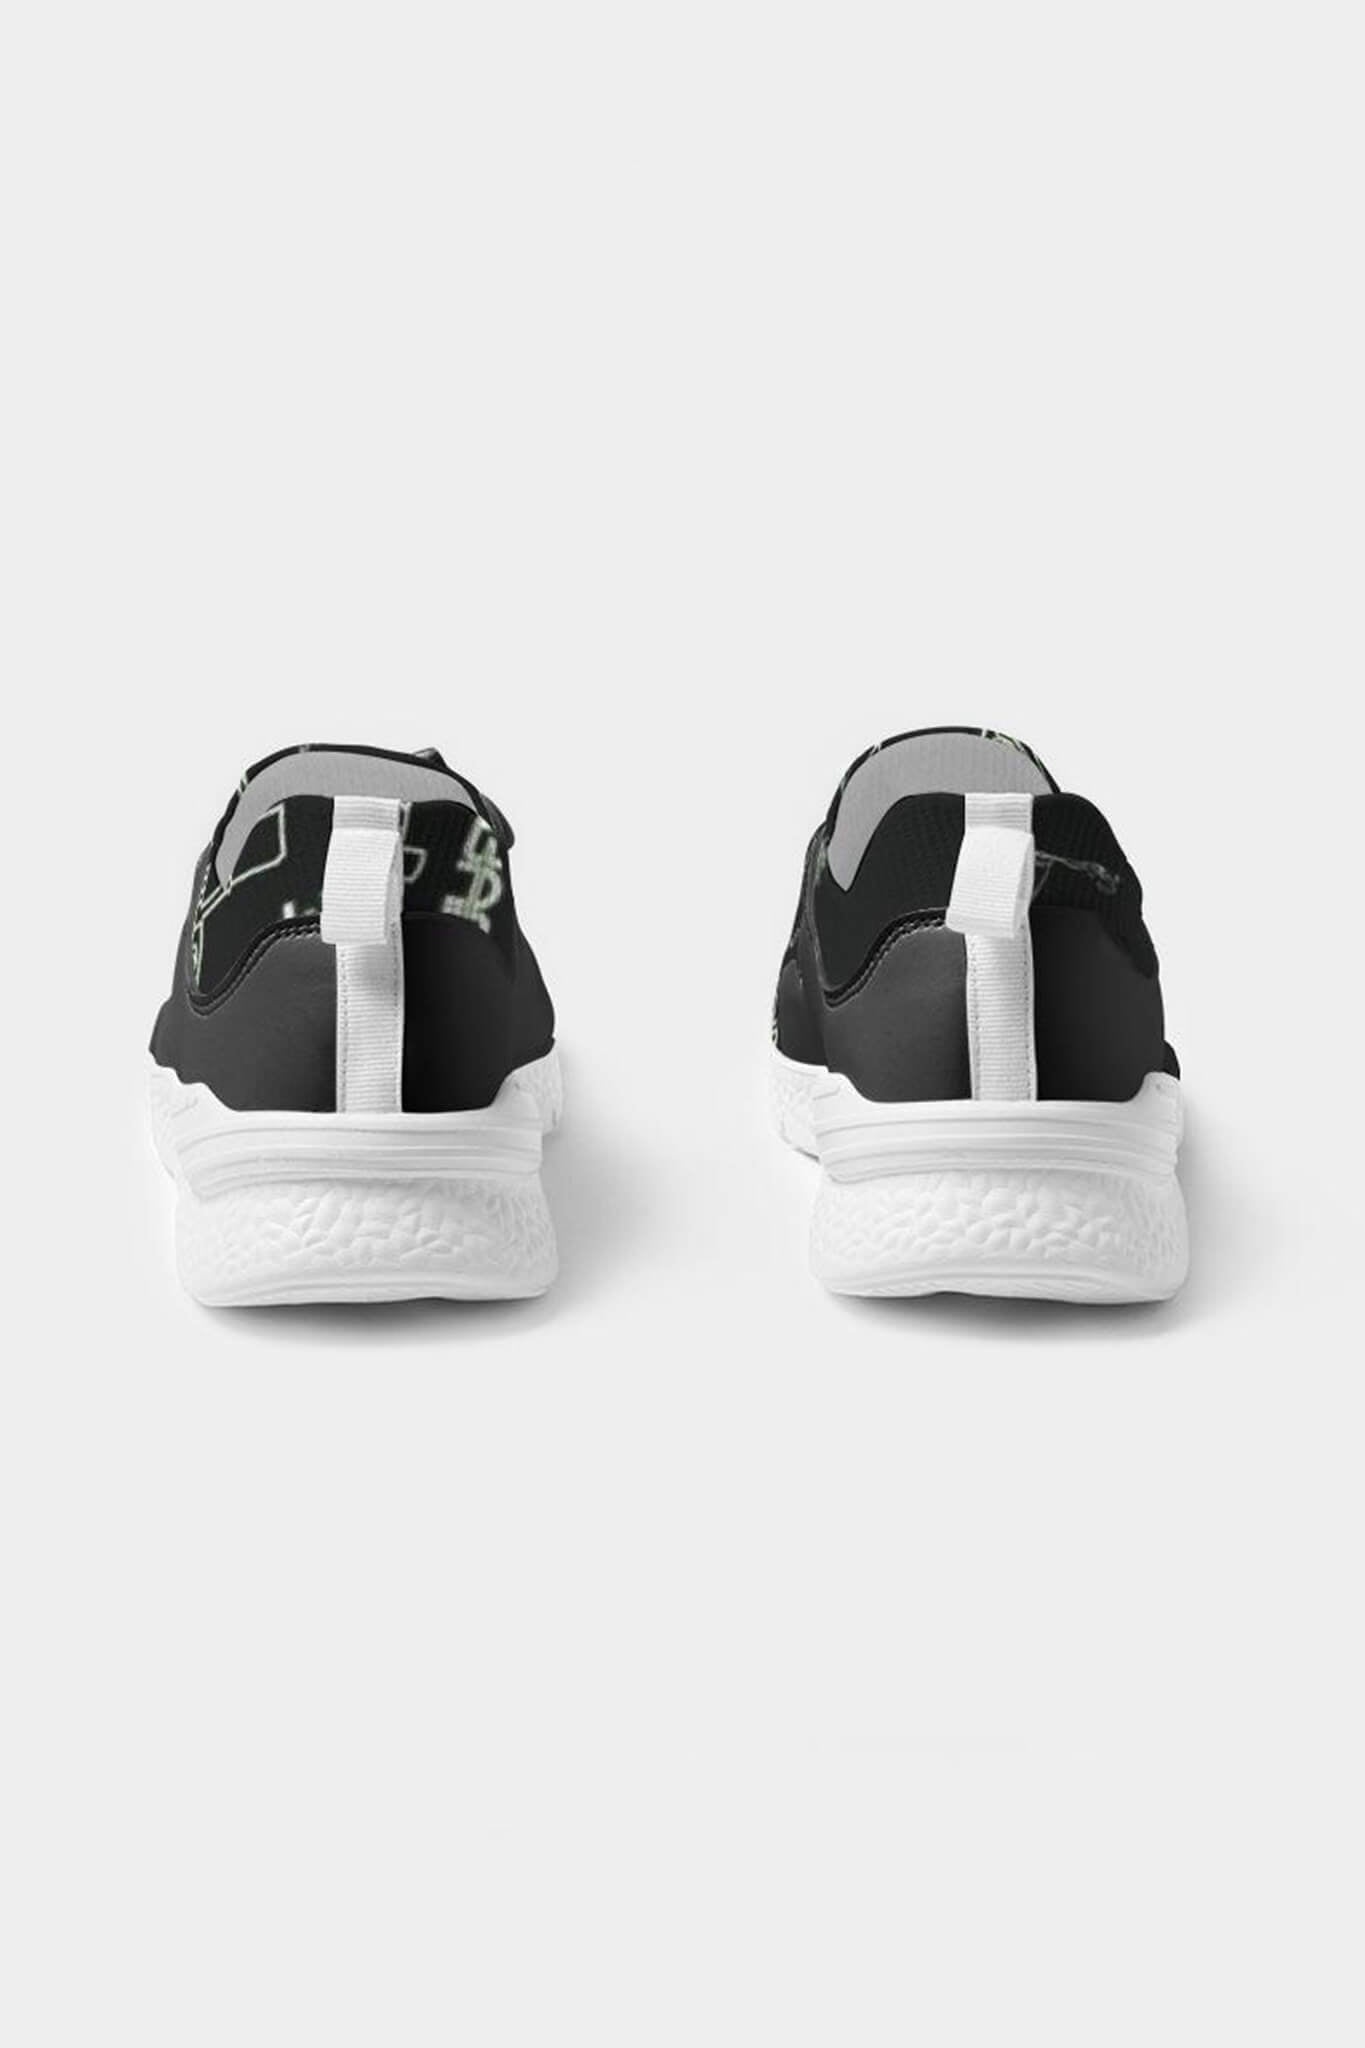 URBAN STRAP Two-Tone Sneakers